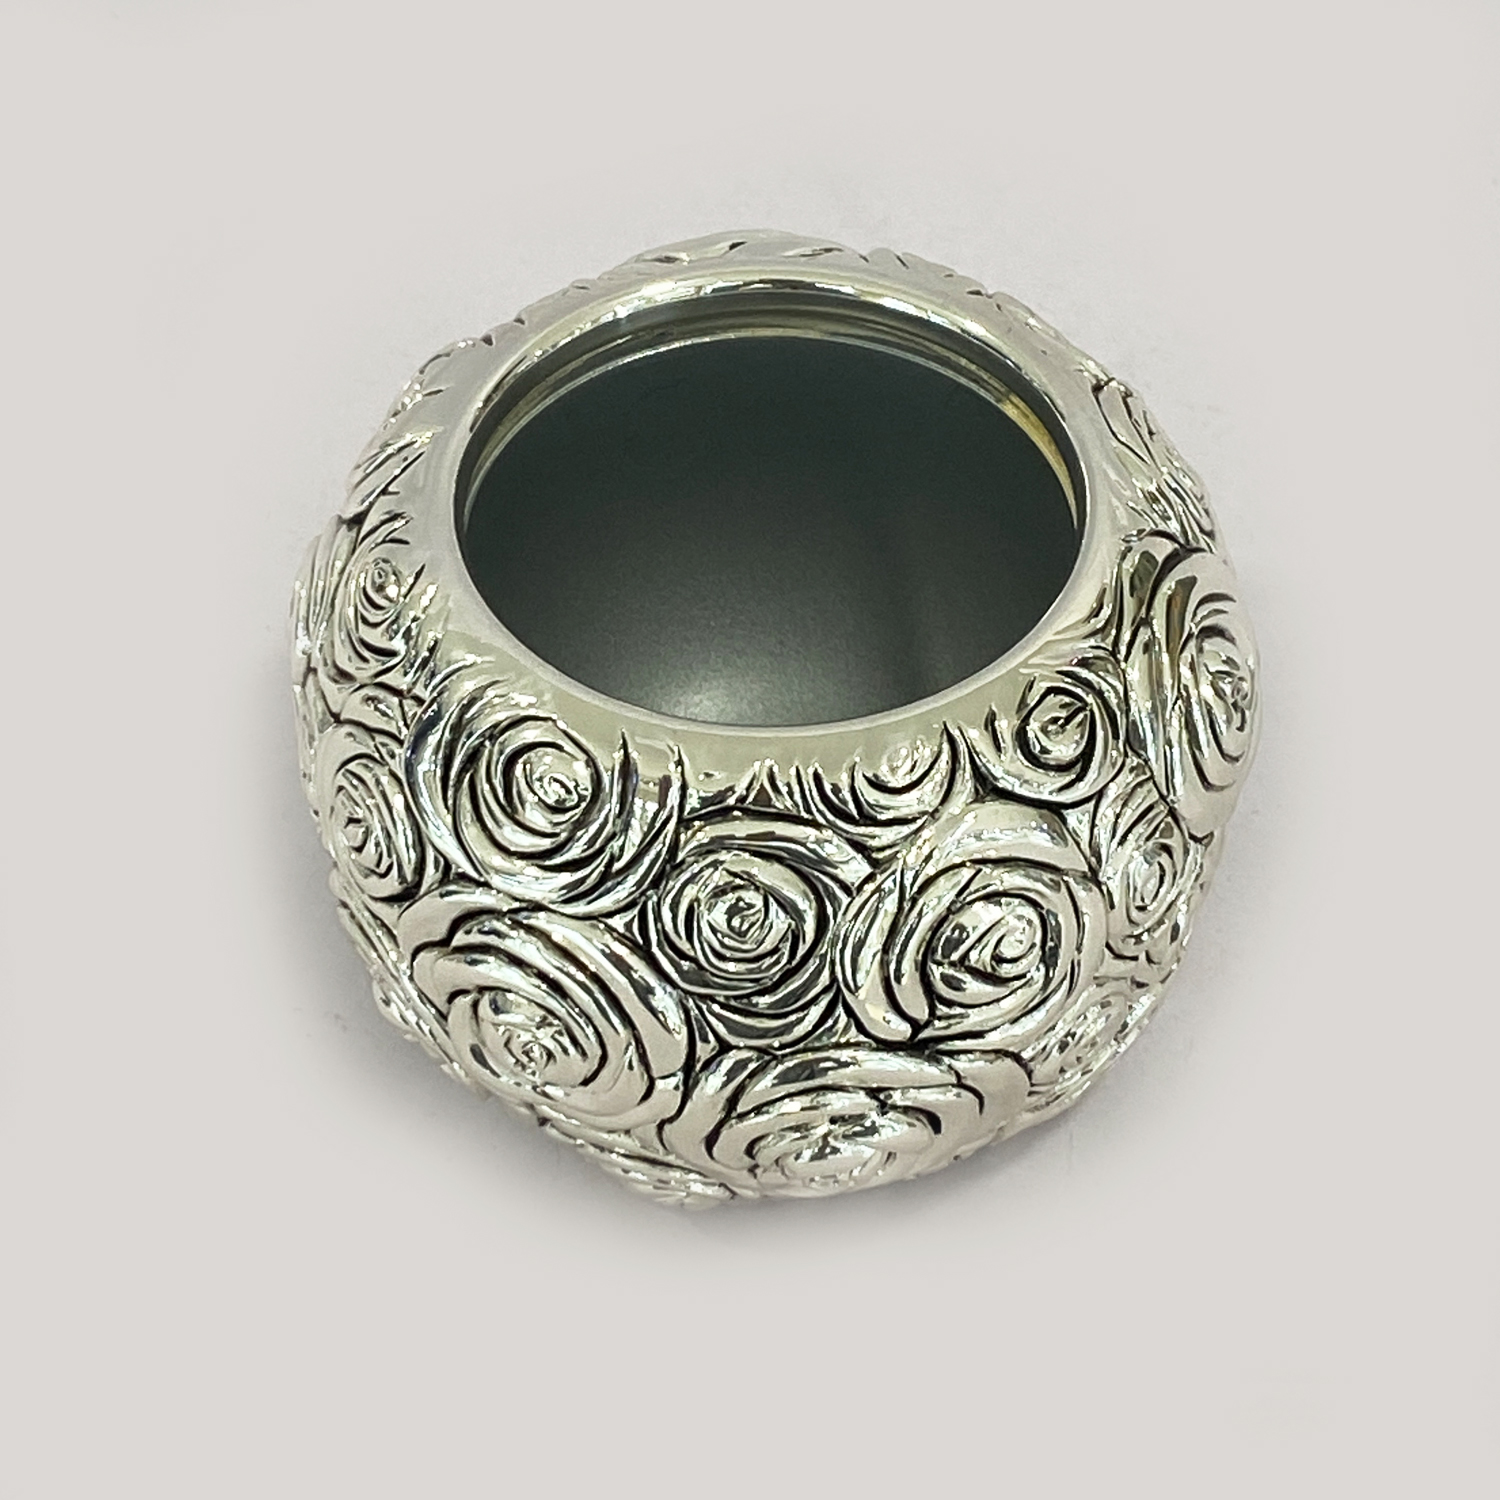 A Silver Vase or Pot Rose Motif | 3.2 Inch